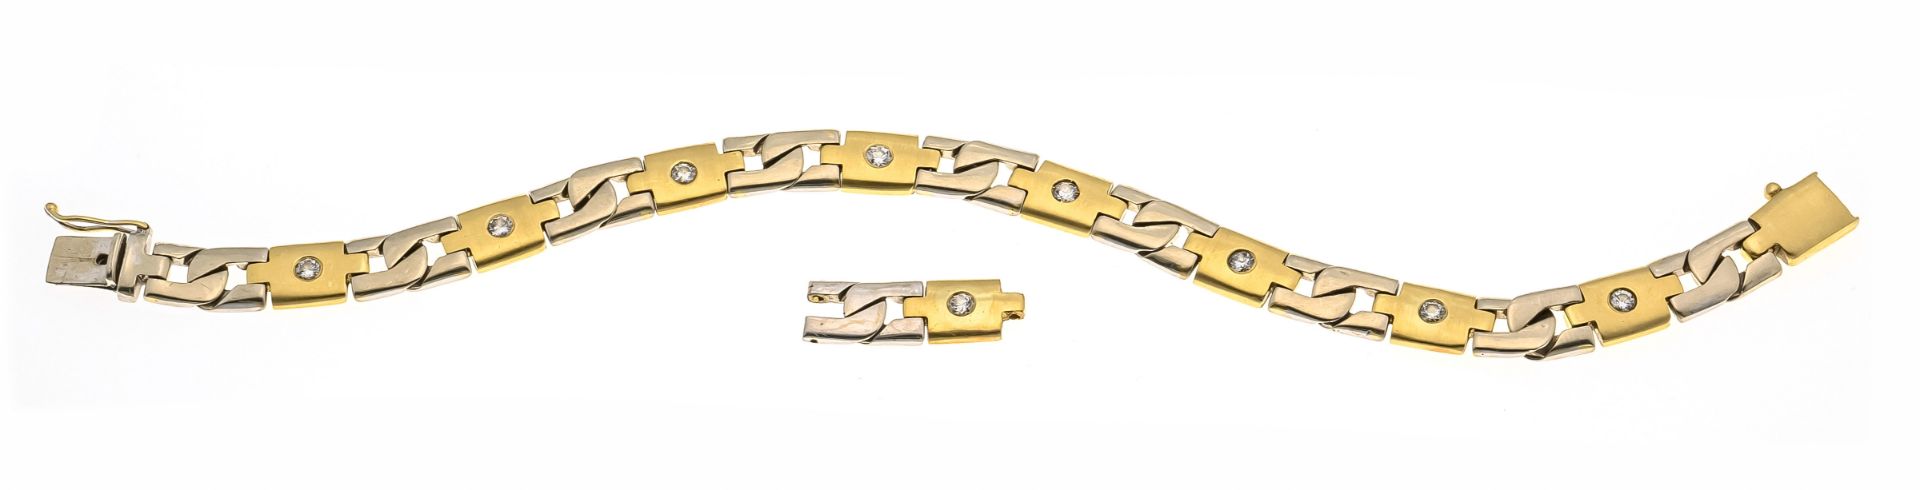 Brilliant bracelet GG/WG 585/000 with 9 brilliant-cut diamonds, add. 0,72 ct W/SI, box clasp with - Image 2 of 2